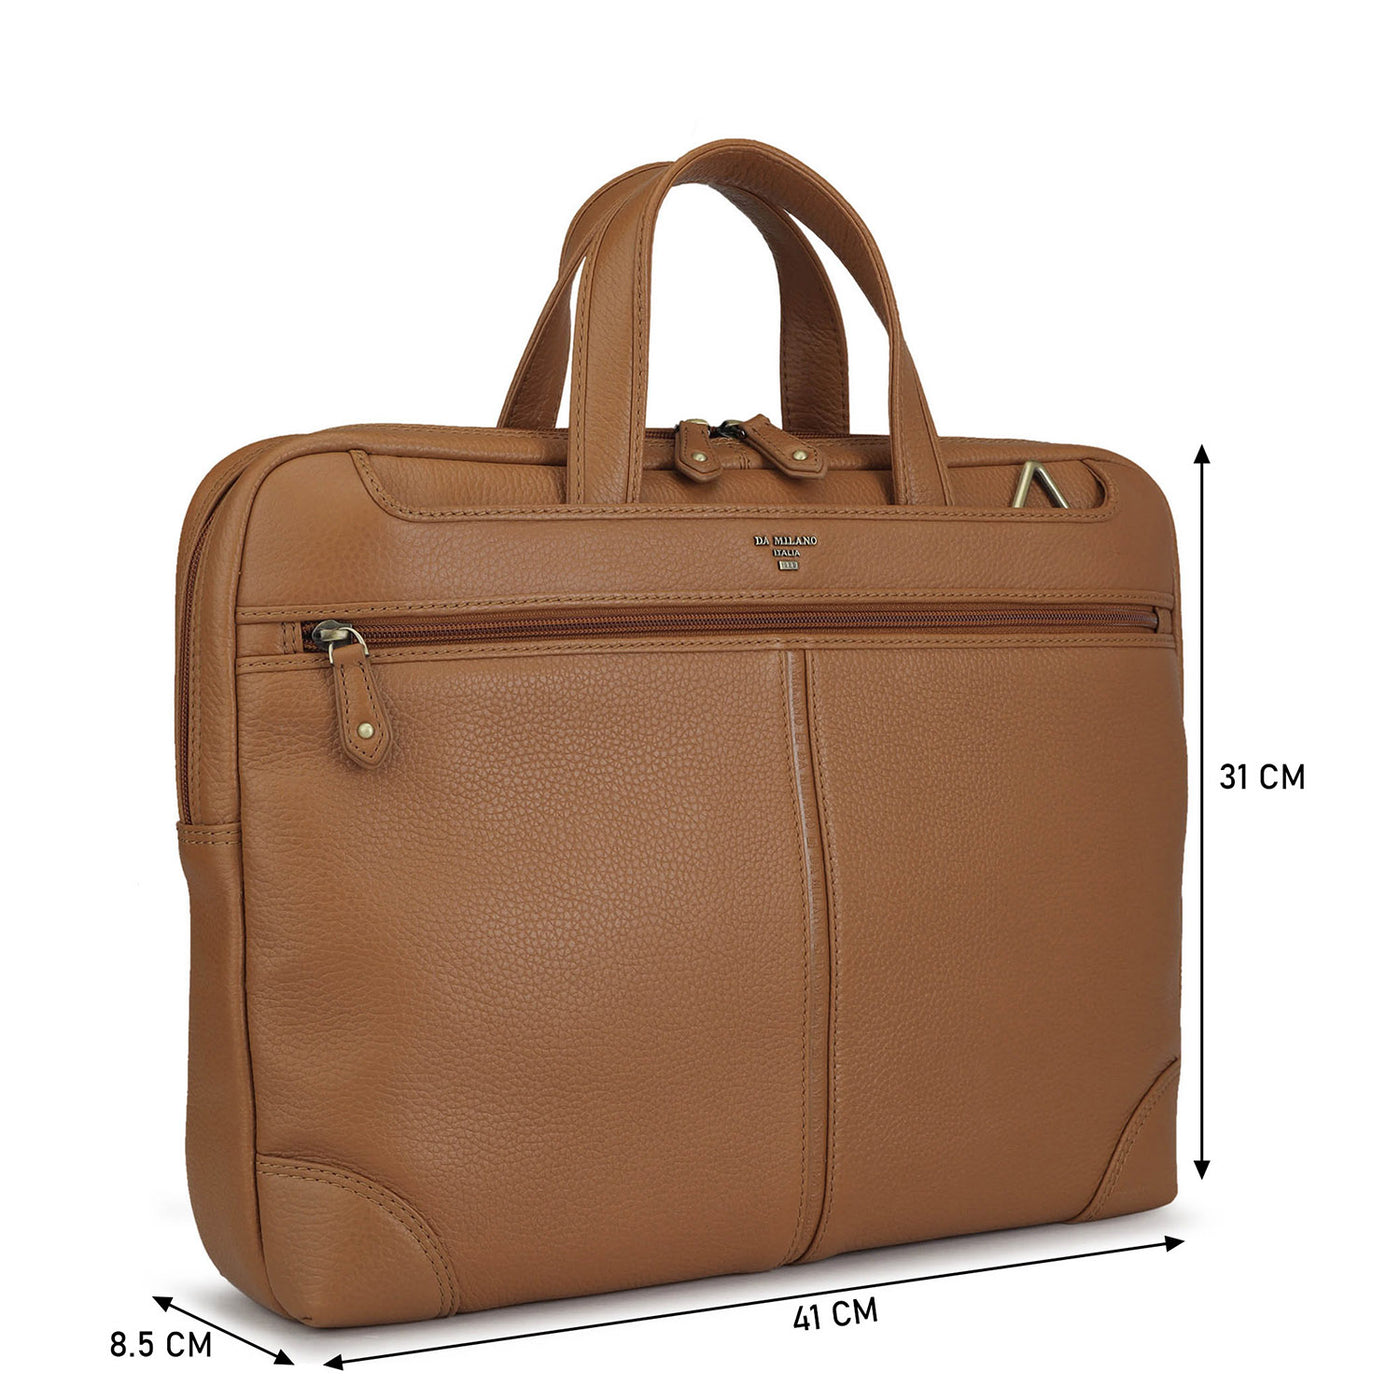 Tan Wax Leather Laptop Bag - Upto 15"